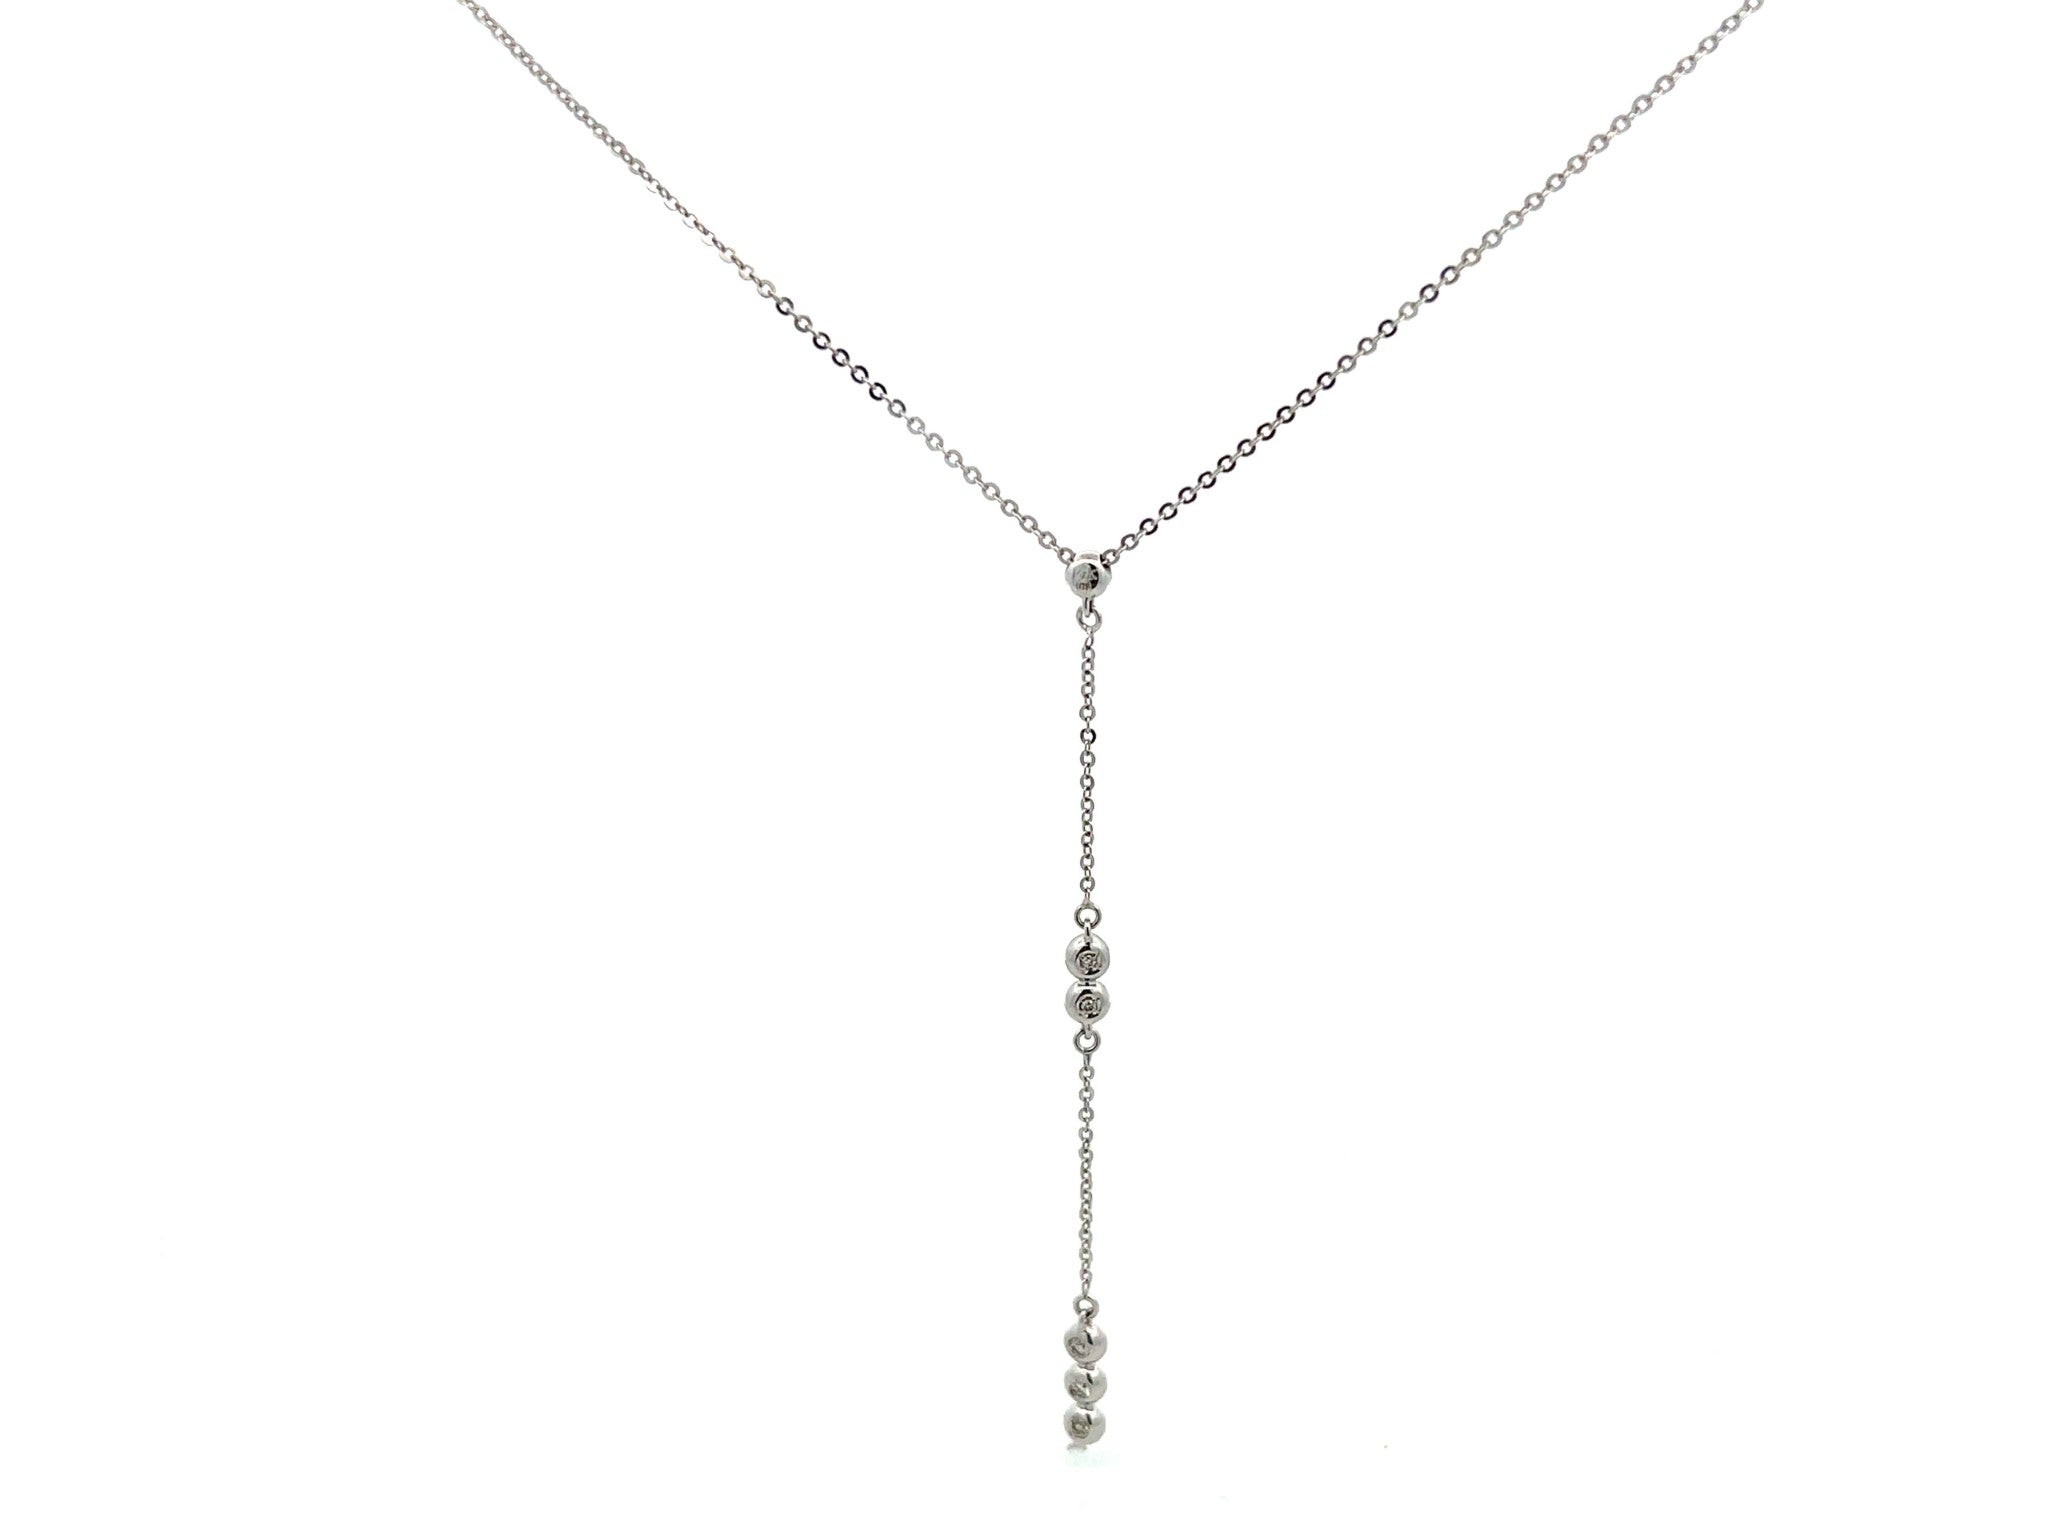 Multi Diamond Y-Drop Necklace in 14k White Gold